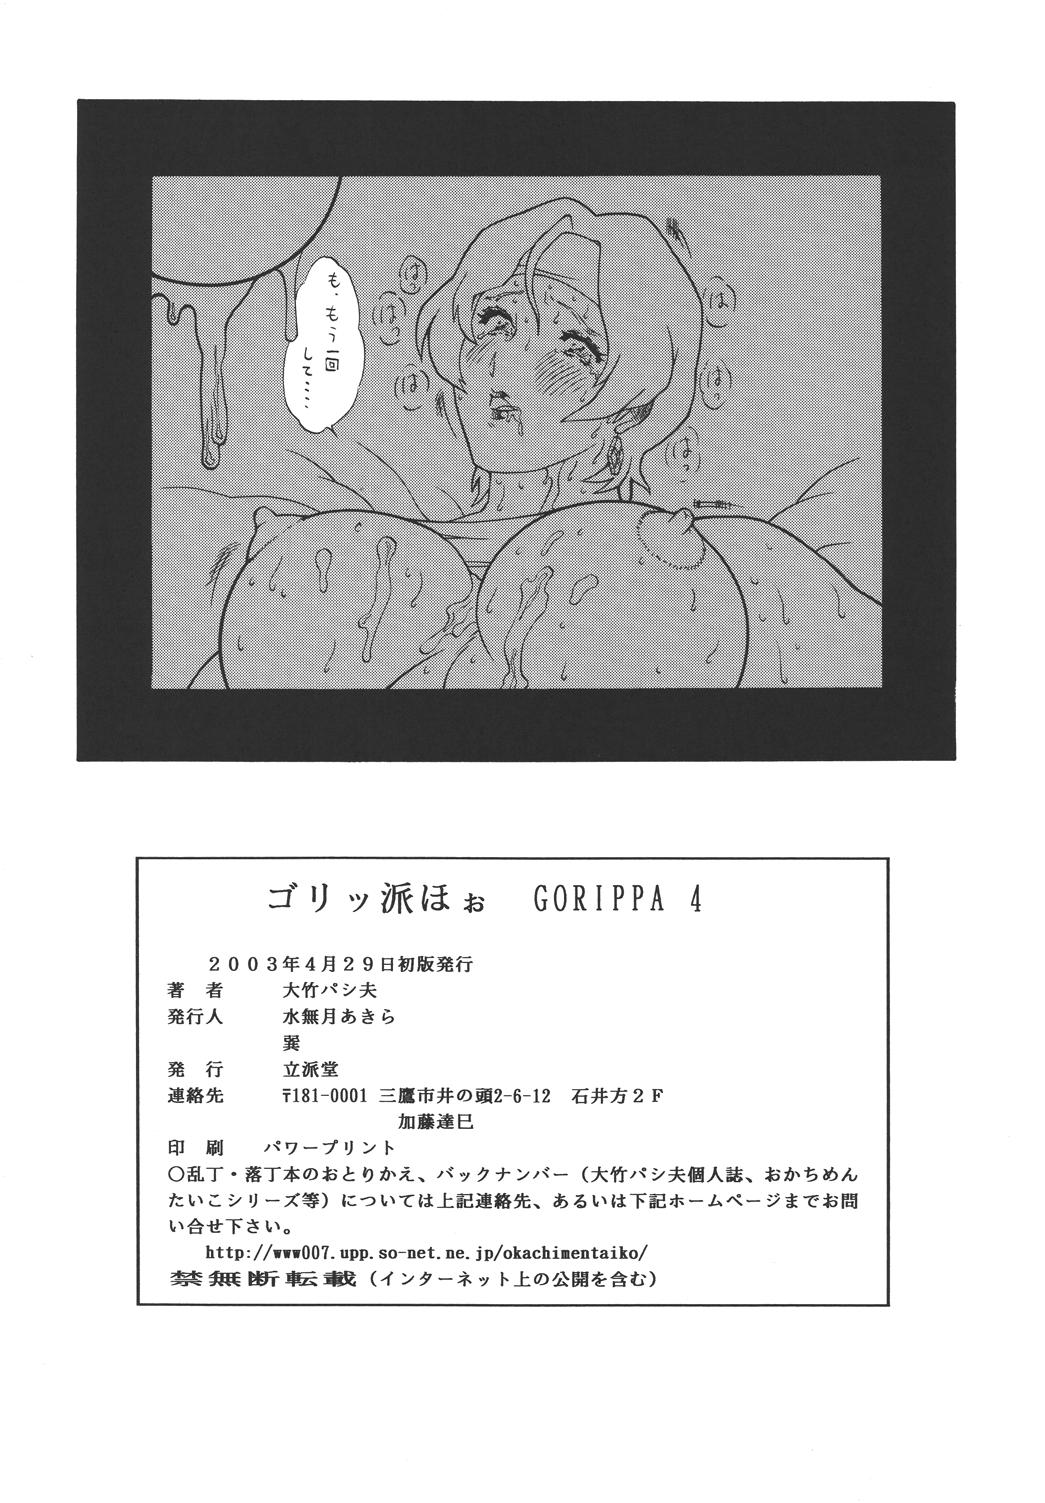 Sexcam Gorippa 4 - Neon genesis evangelion Love hina Urusei yatsura Slayers Maison ikkoku Noir Final fantasy unlimited Rahxephon Flash - Page 83